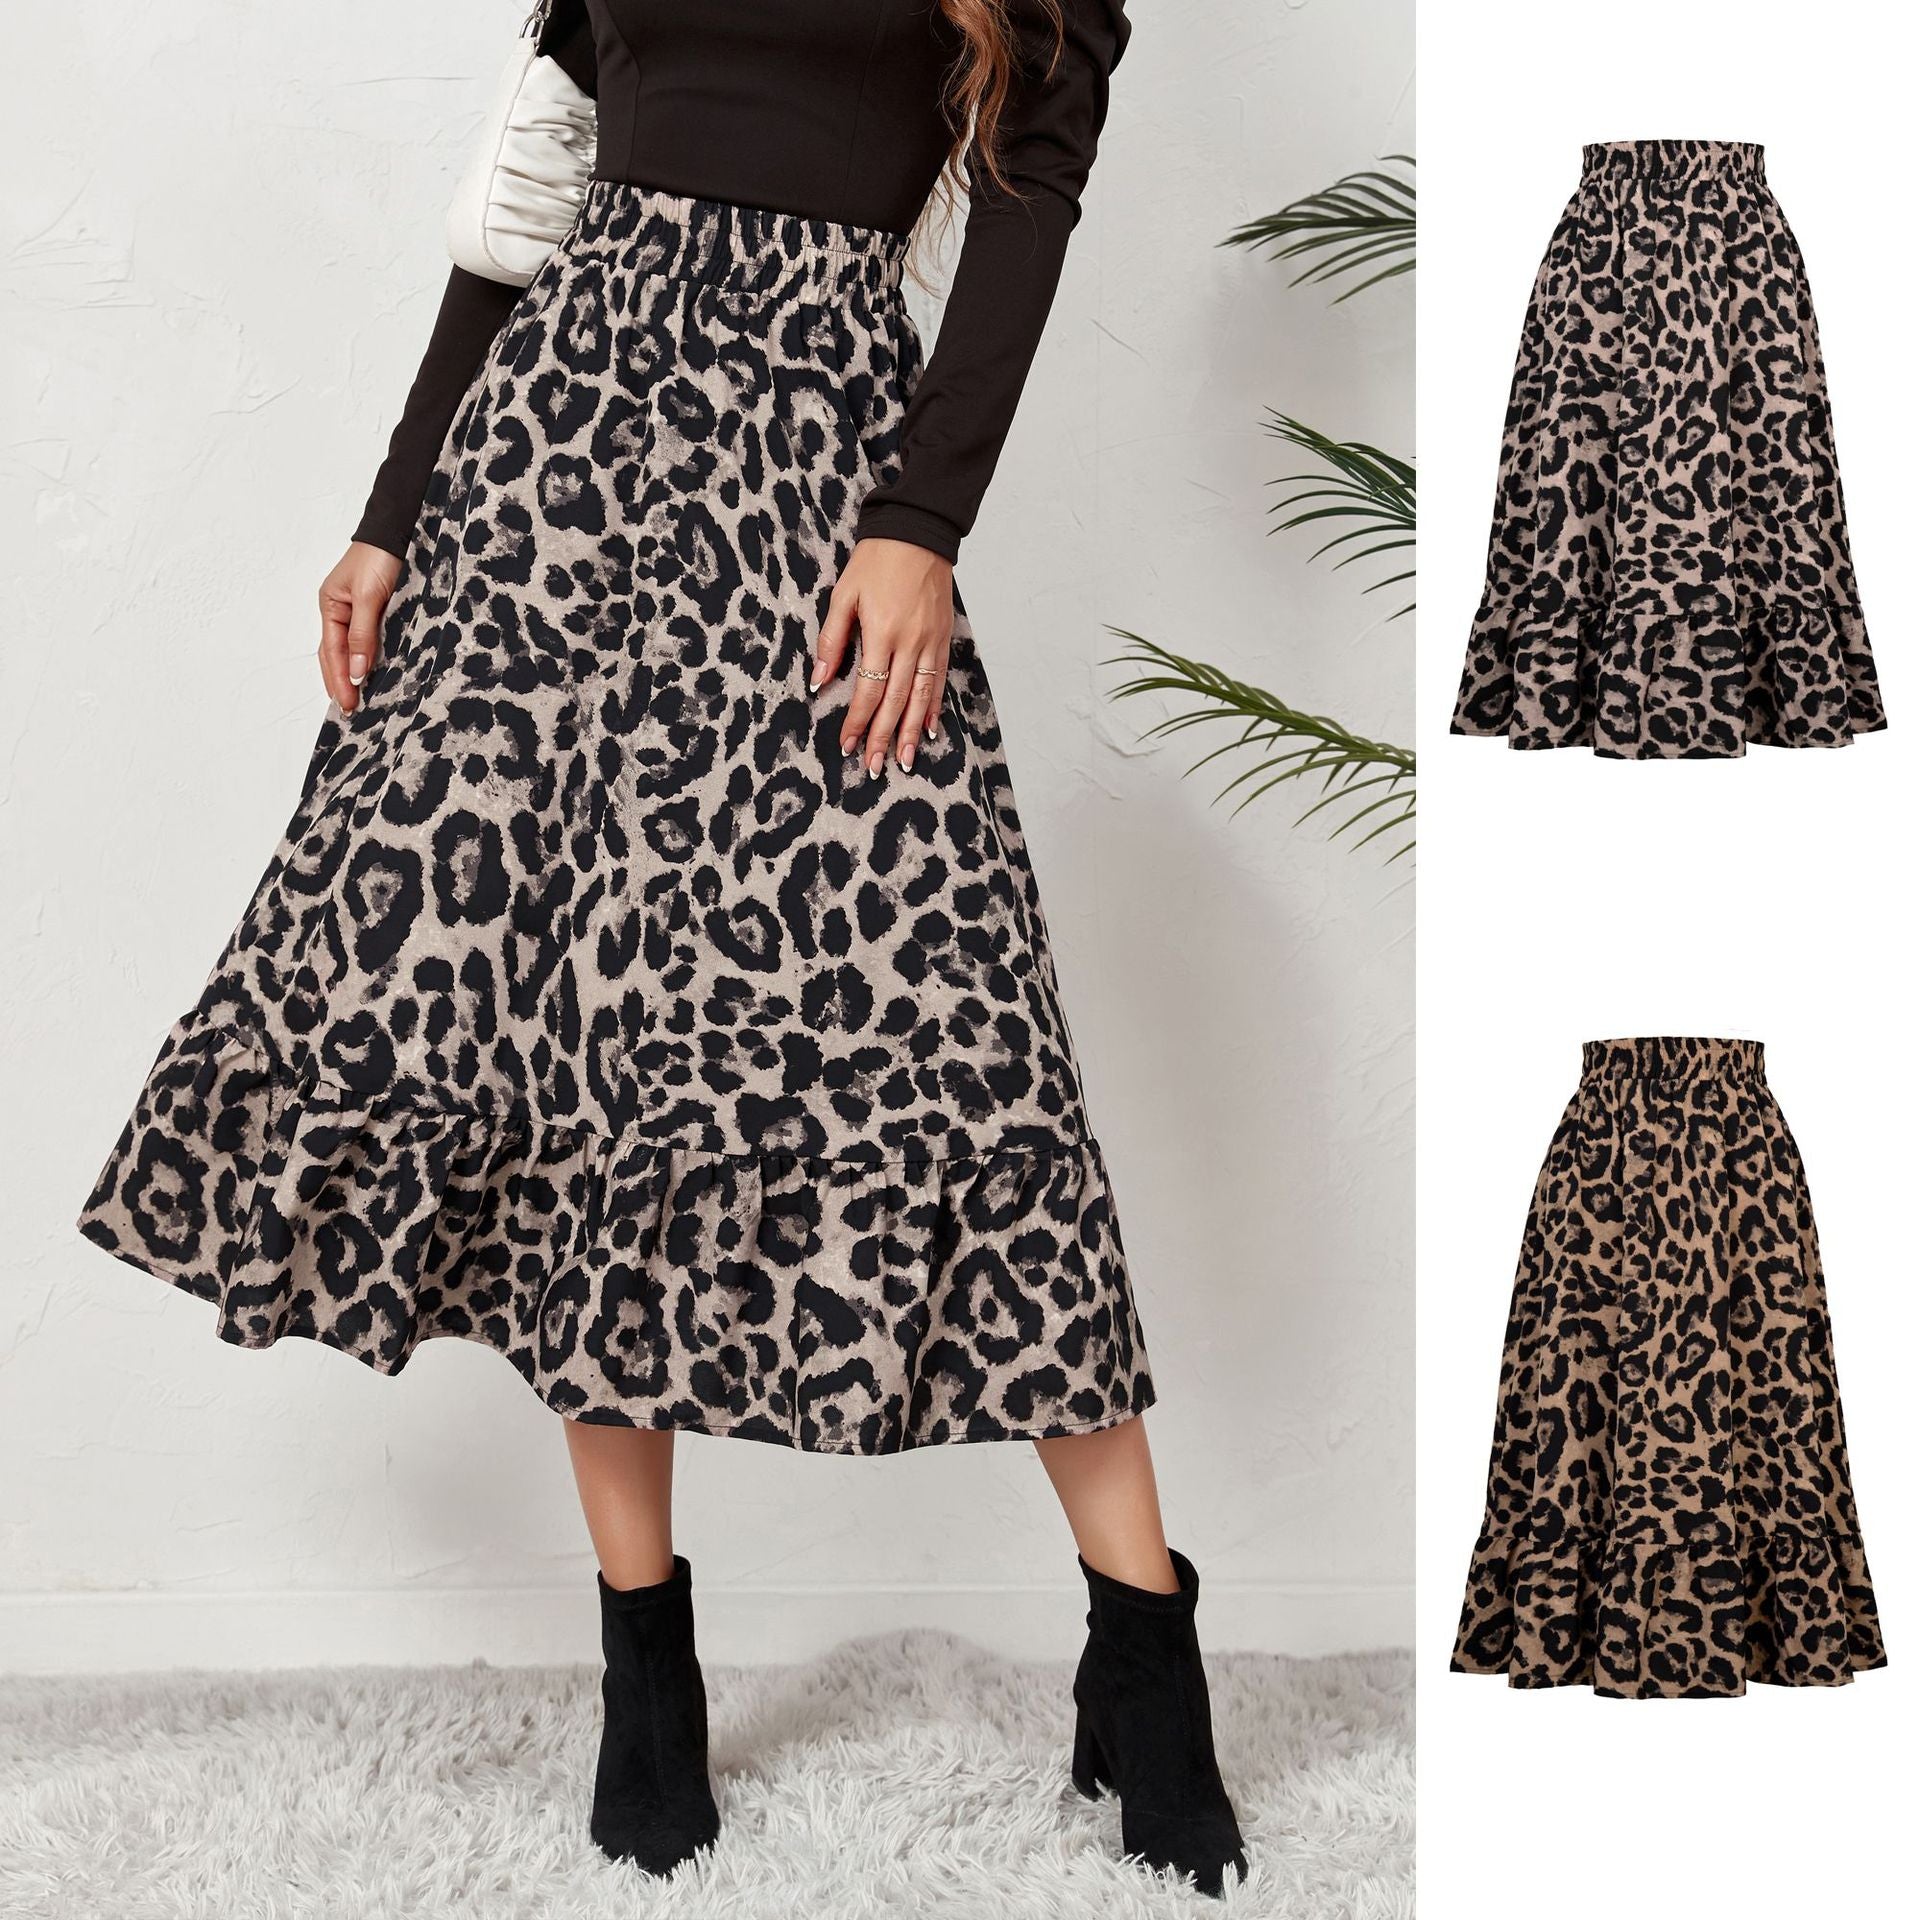 Women's Sexy Leopard Print Animal Pattern High Waist Skirt Loose Swing Dress